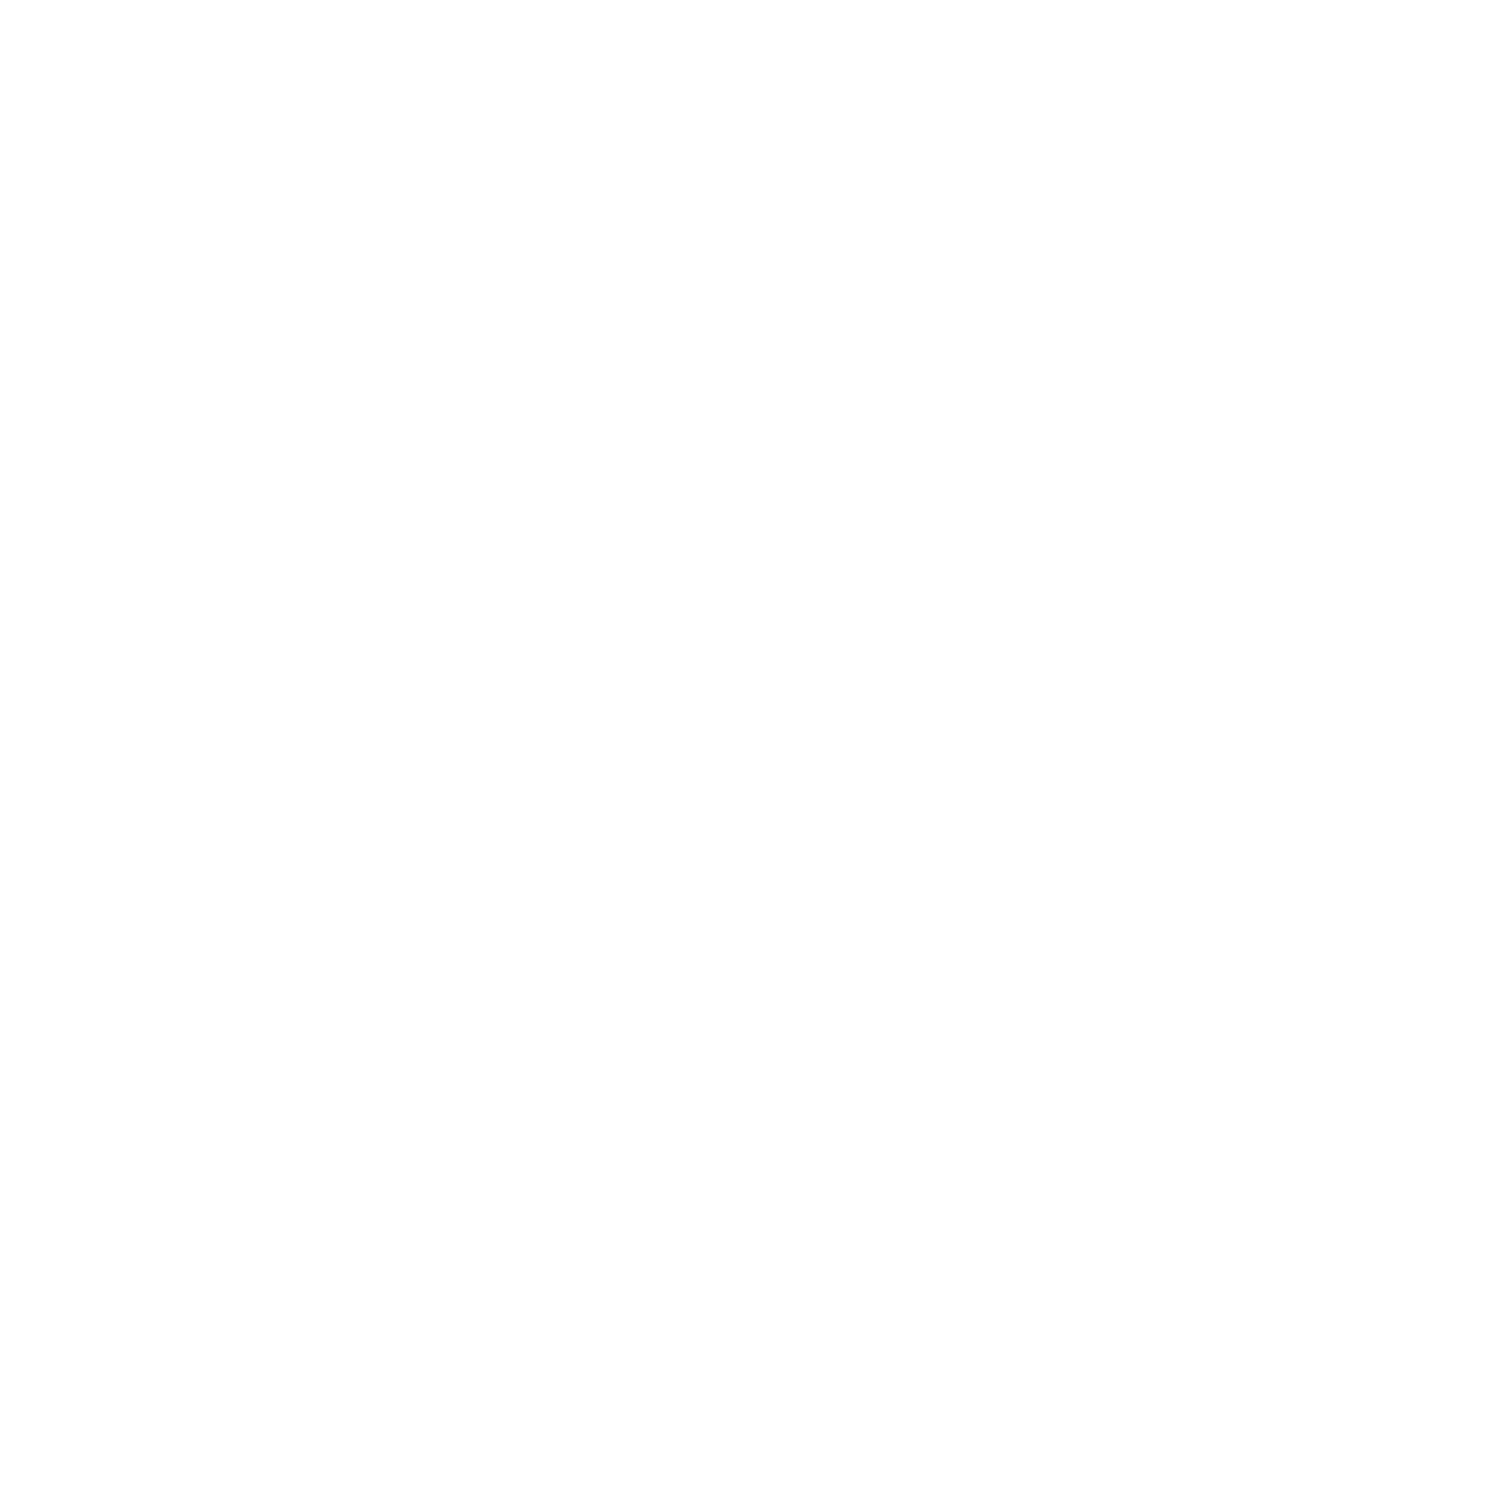 OUTSKIRT FILMS